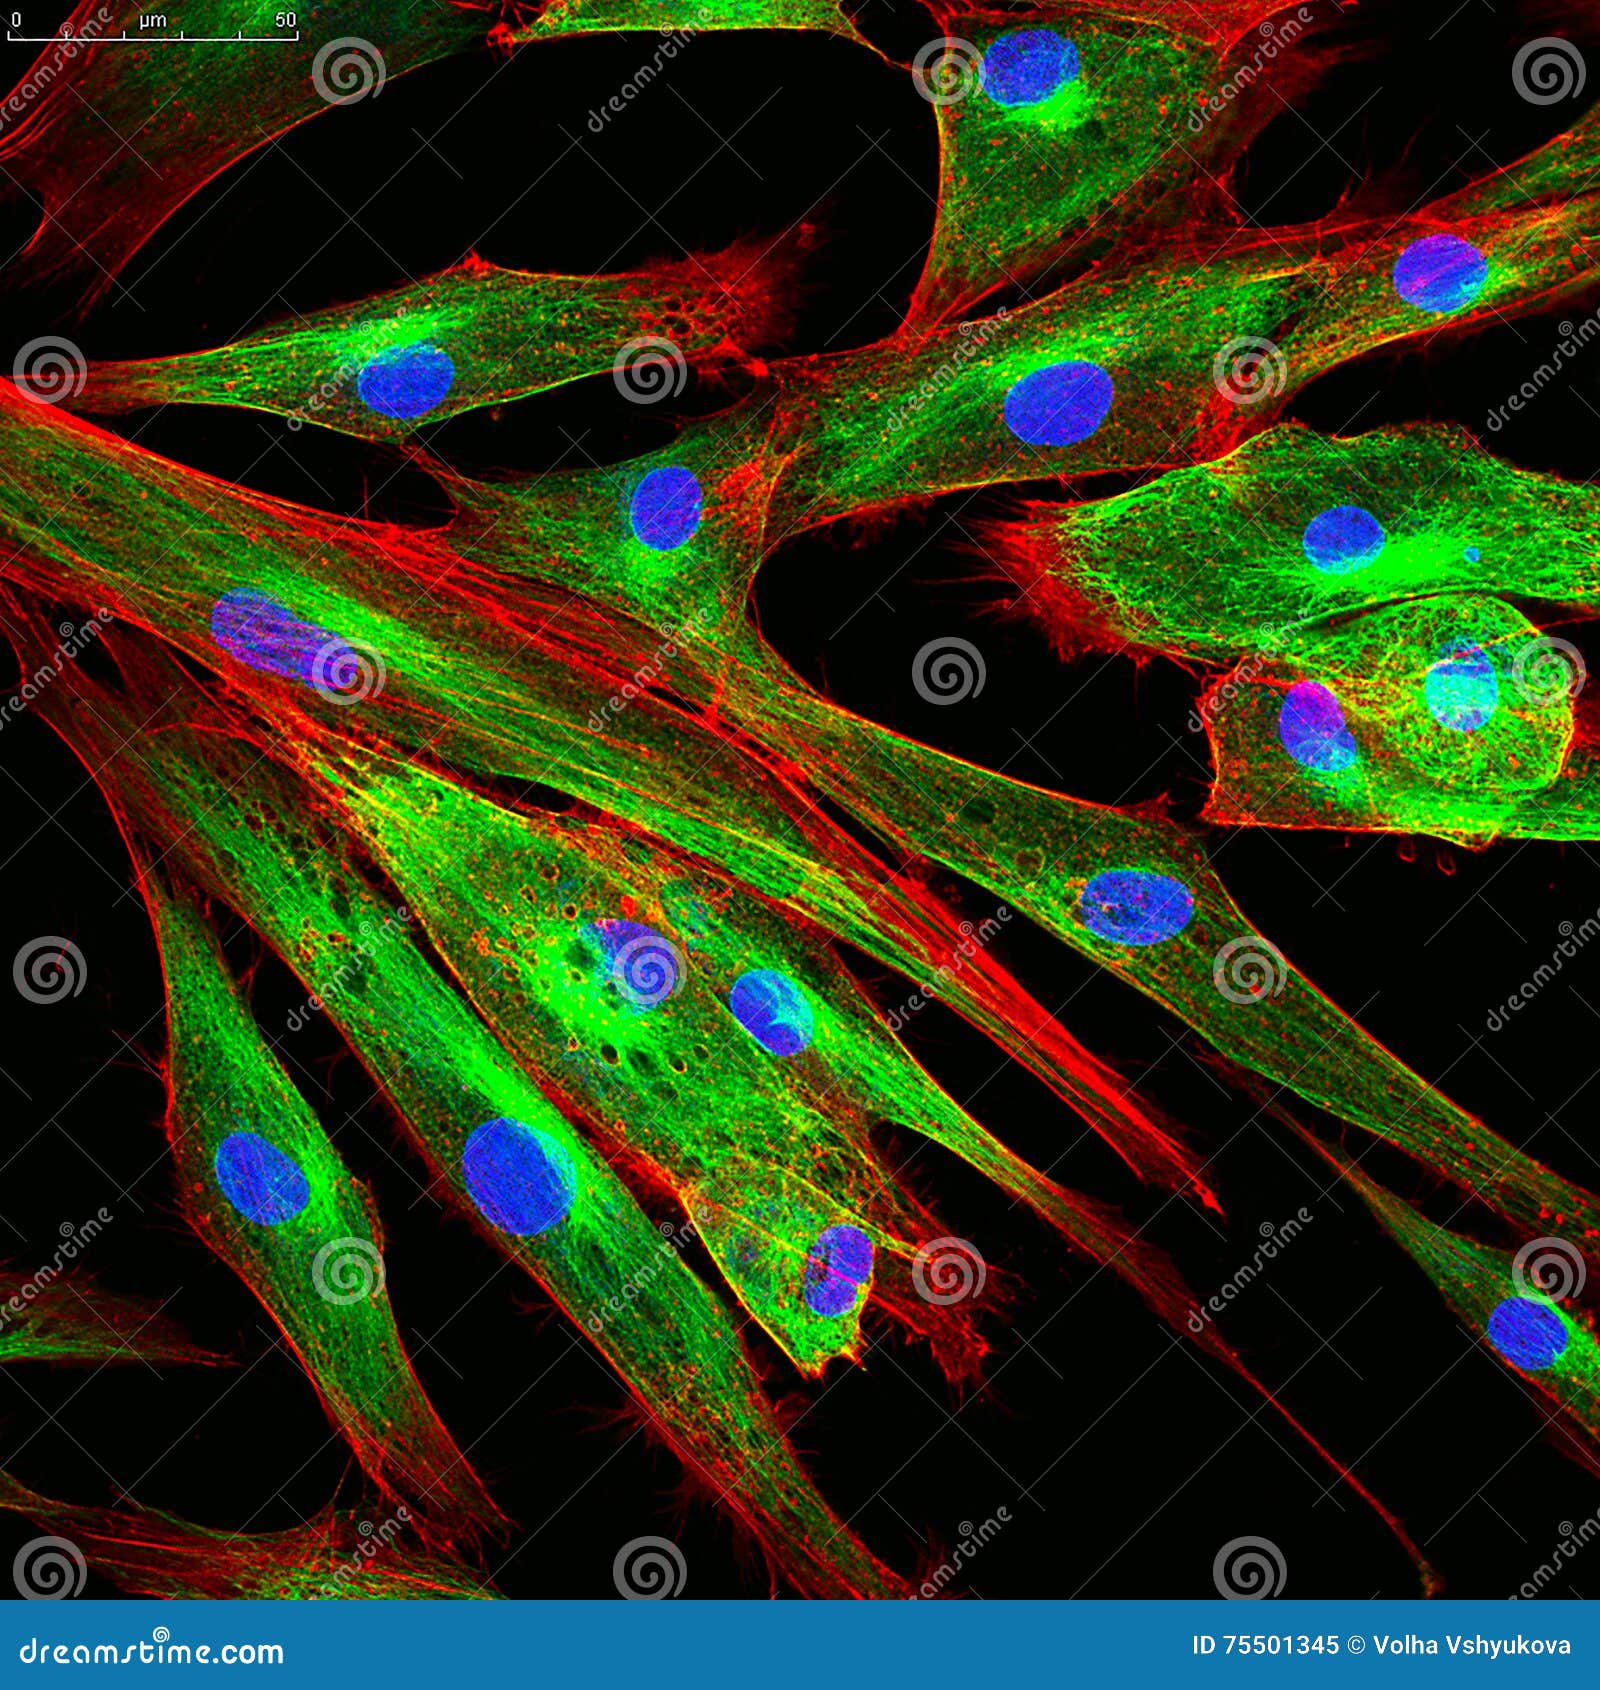 confocal microscopy of fibroblast cells